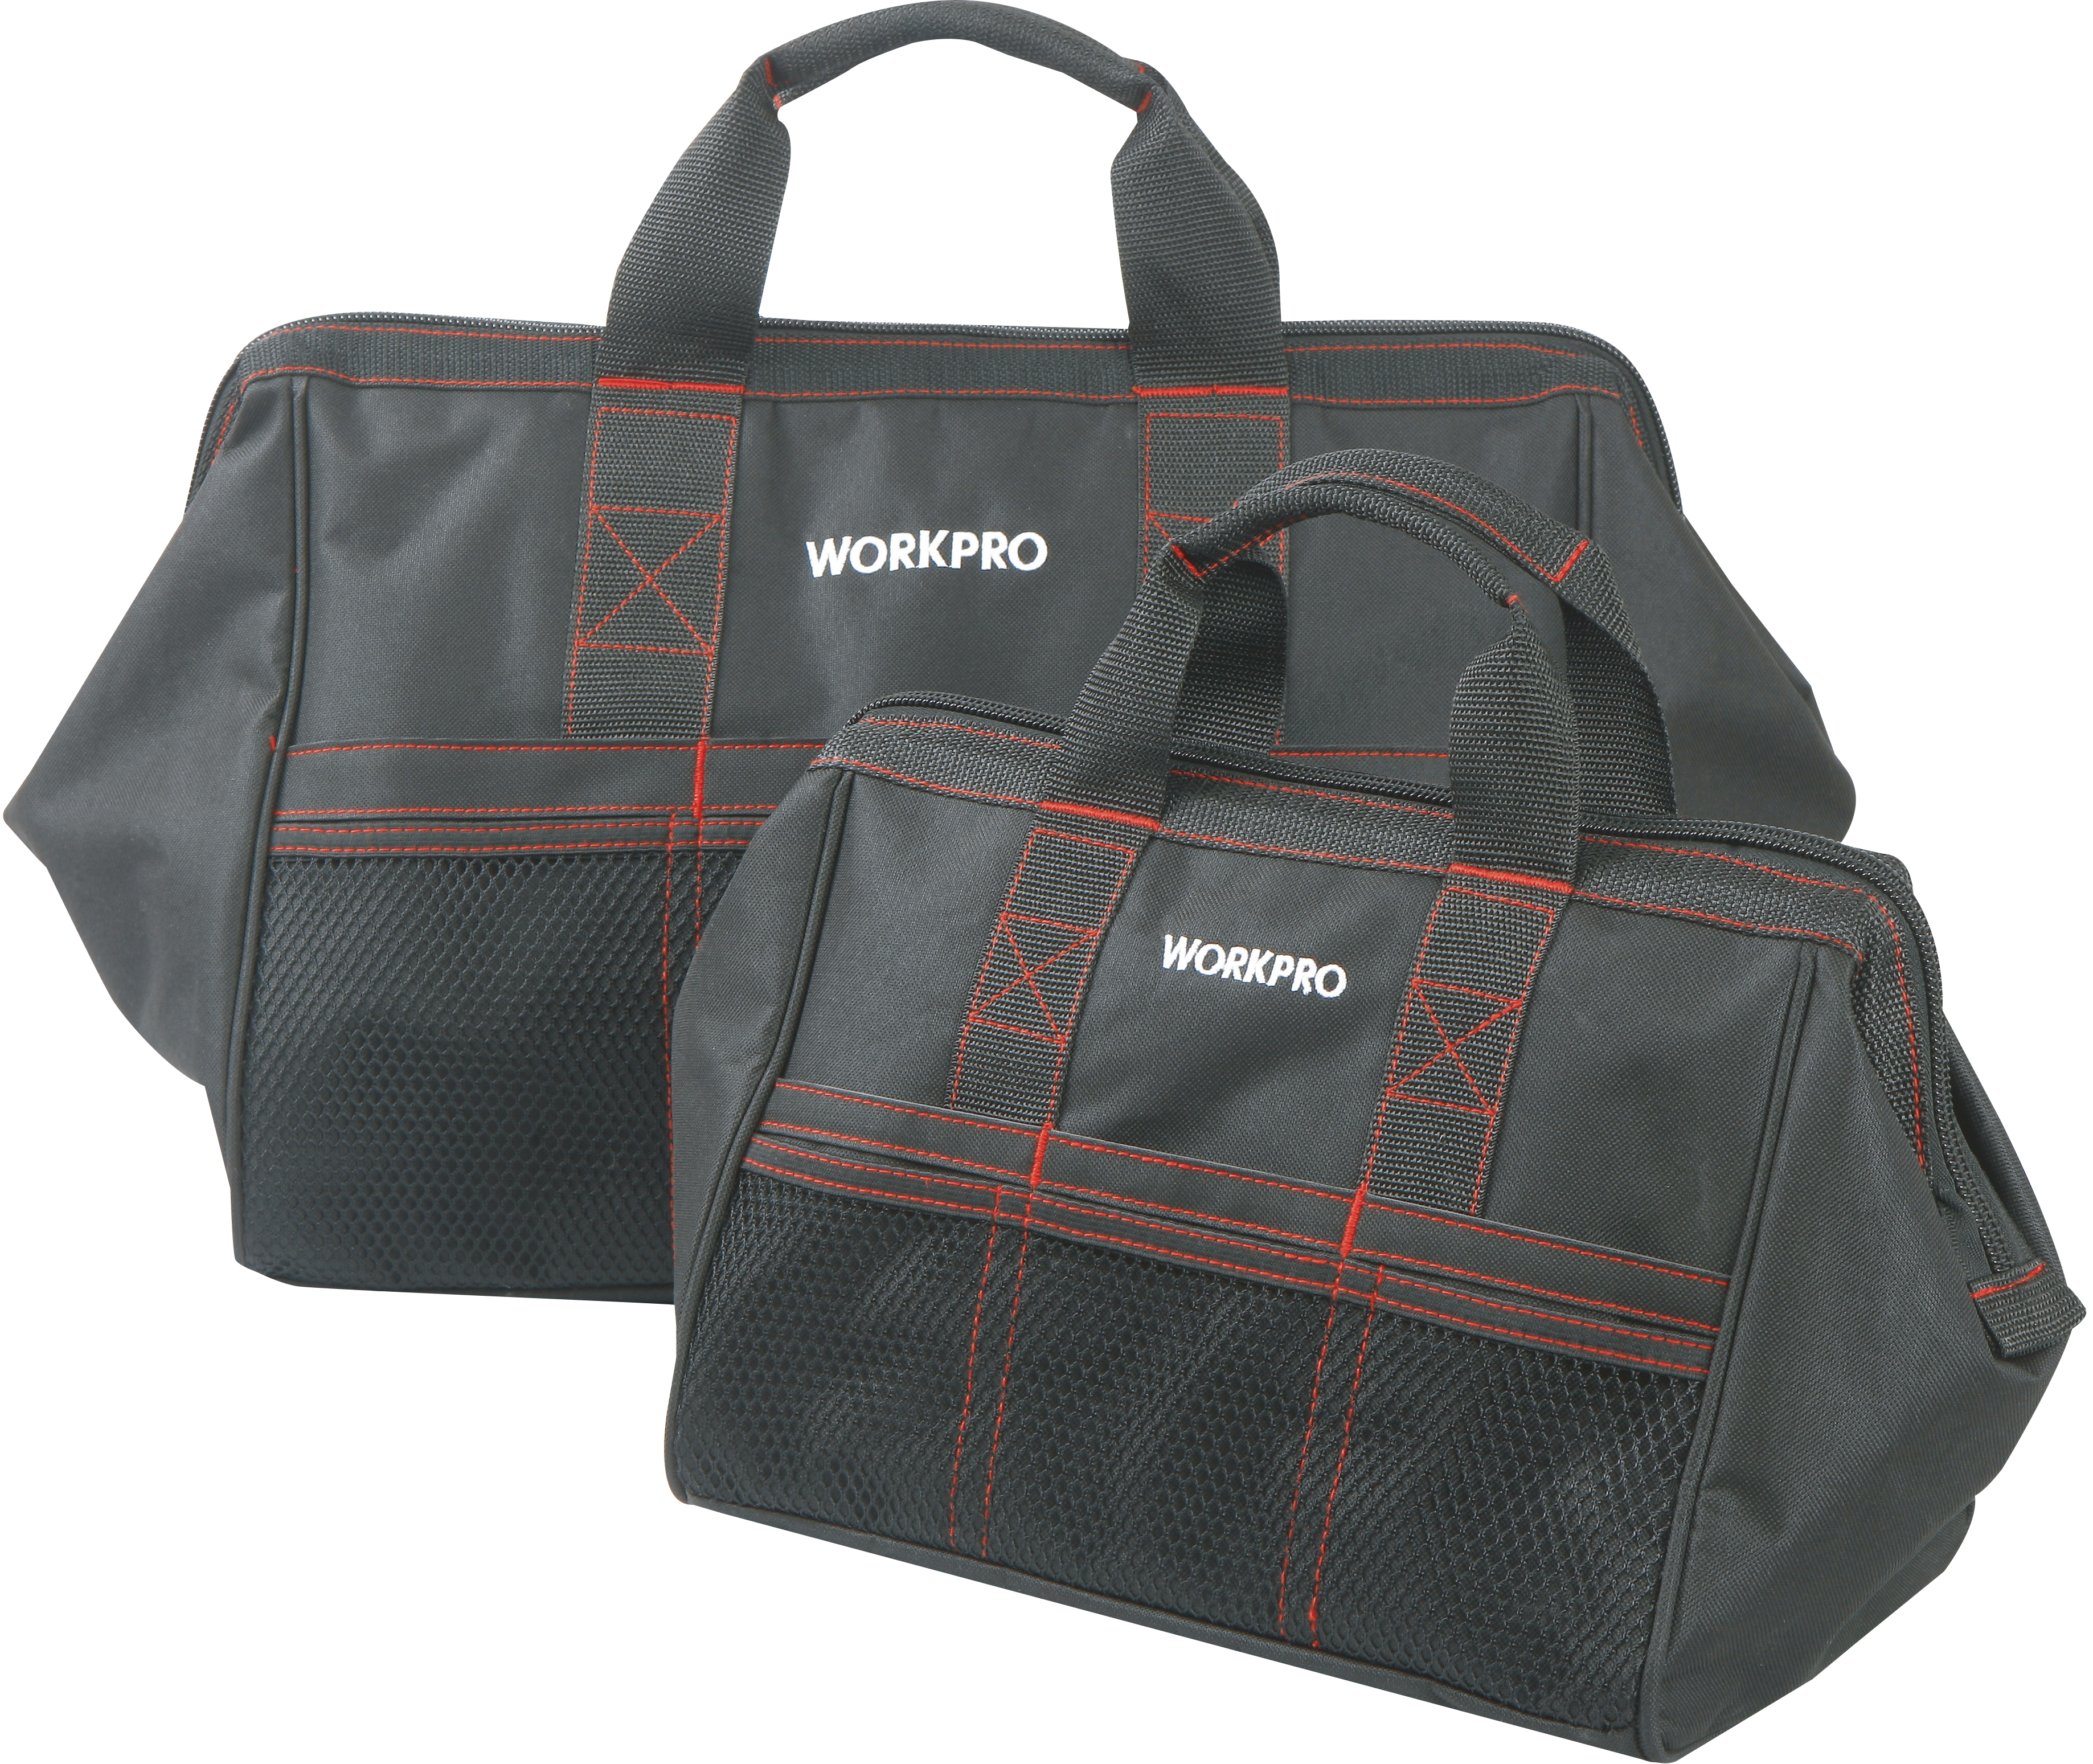 WORKPRO 2-Piece Tool Bag Set